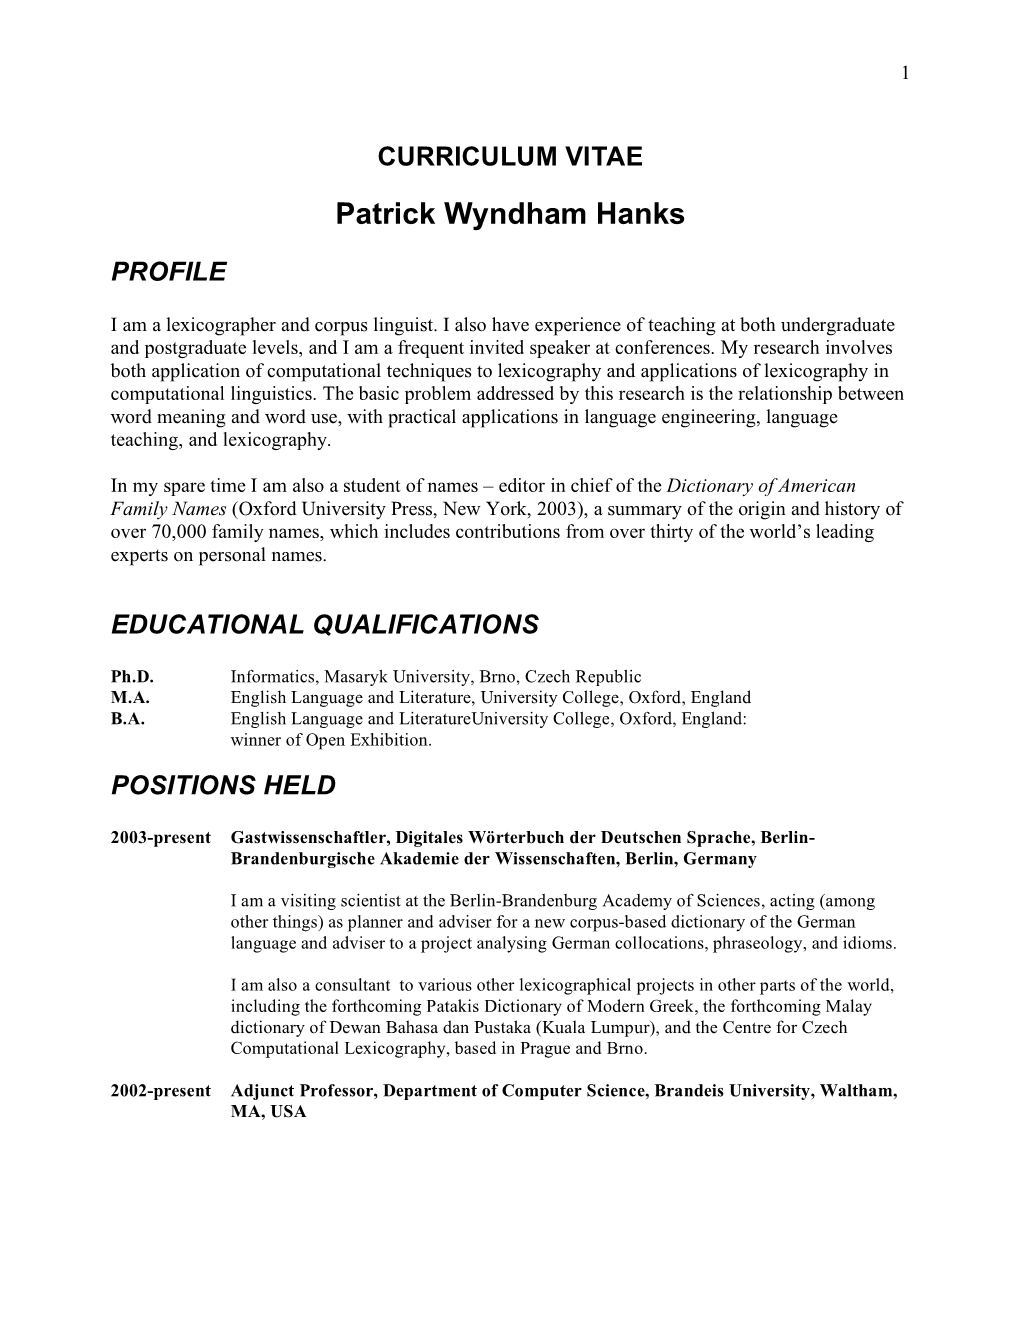 Patrick Wyndham Hanks